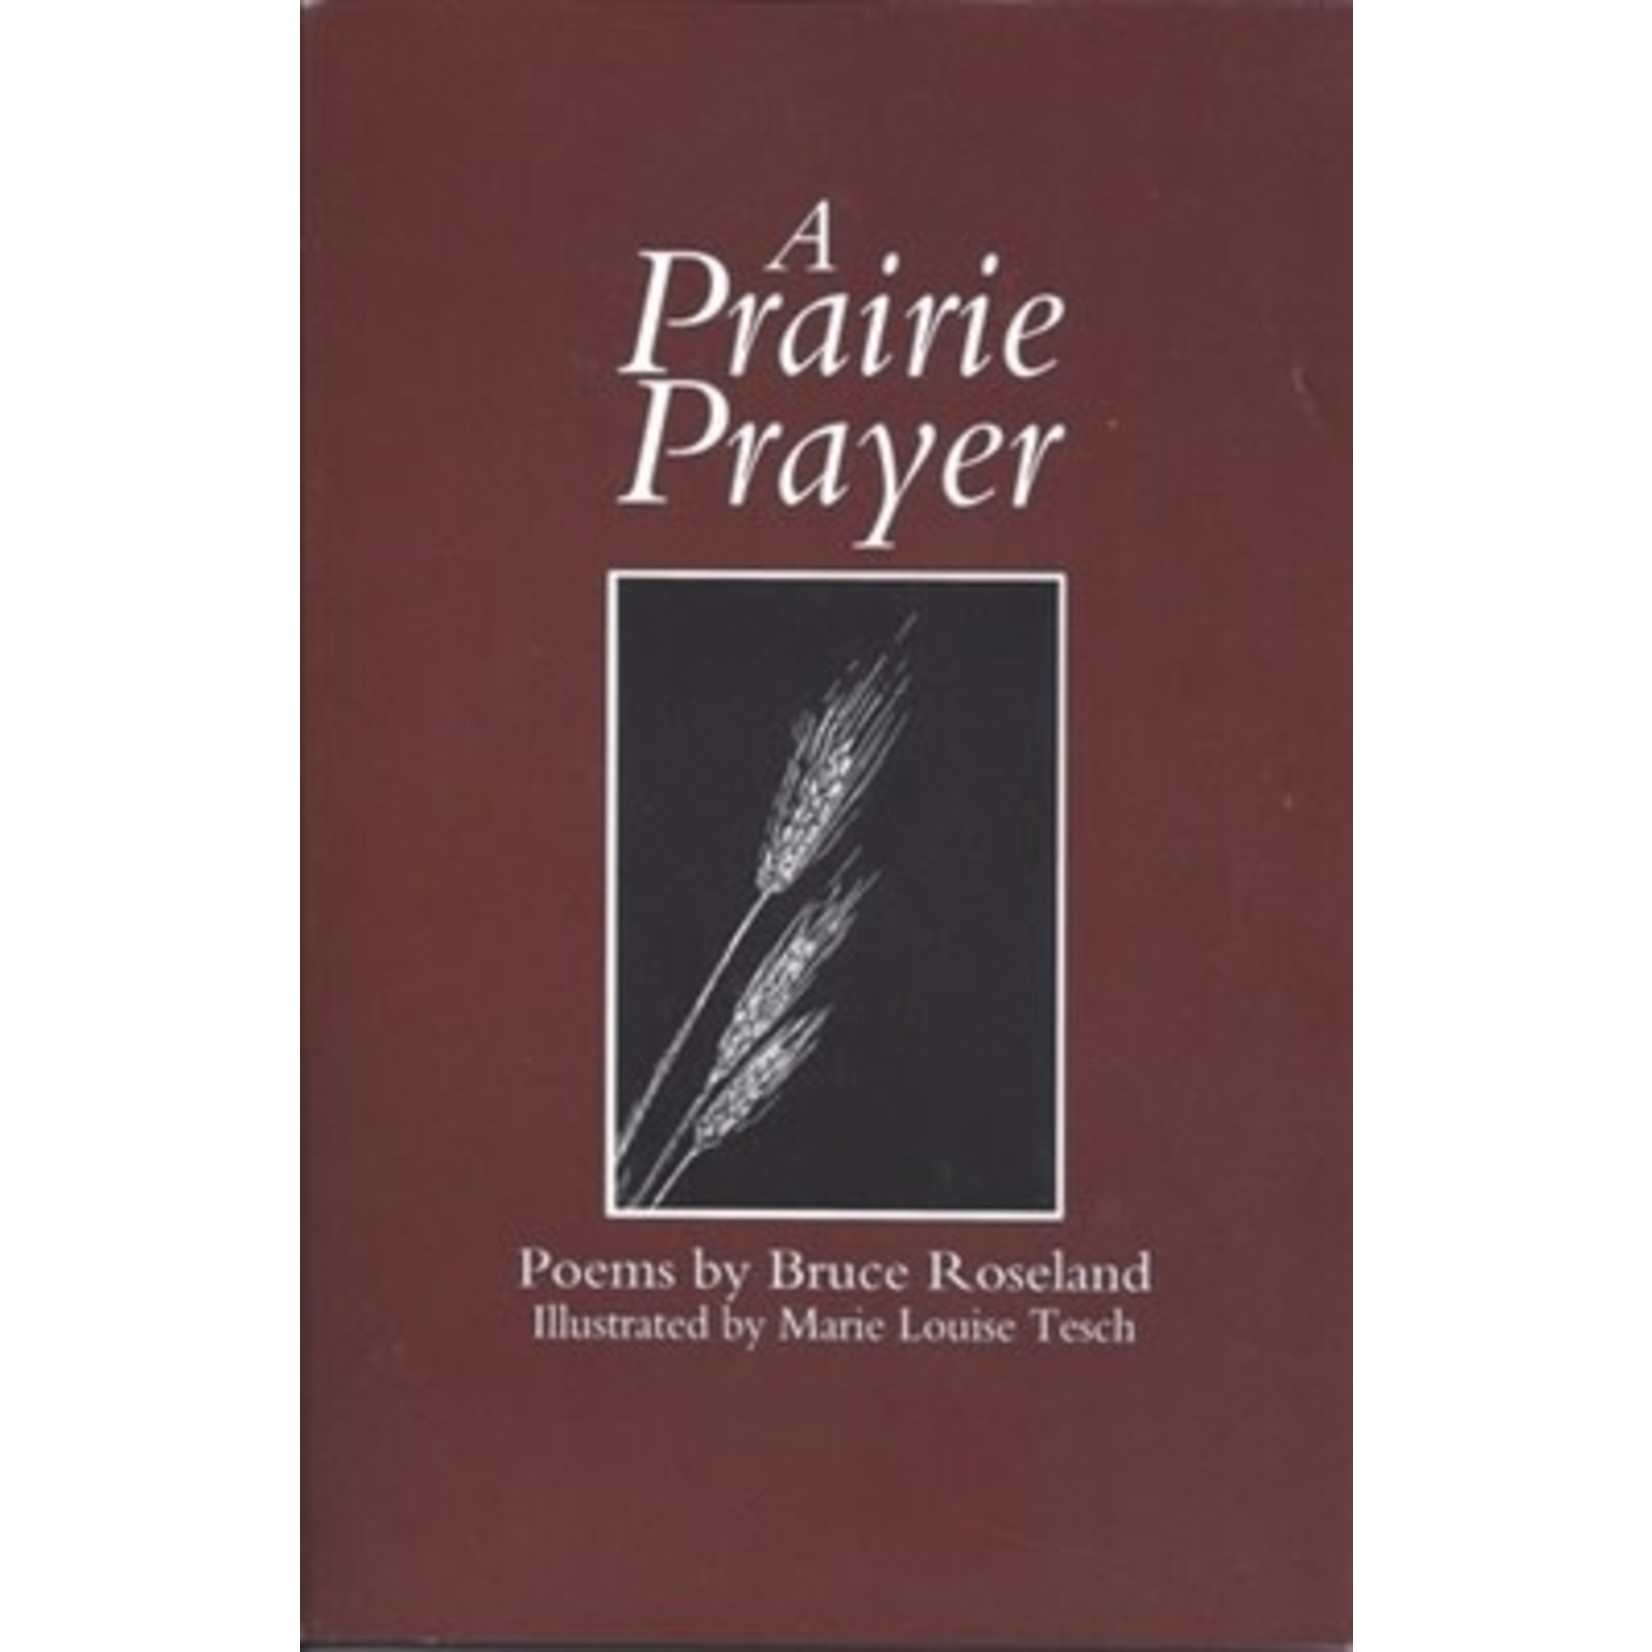 A Prairie Prayer: Poems by Bruce Roseland